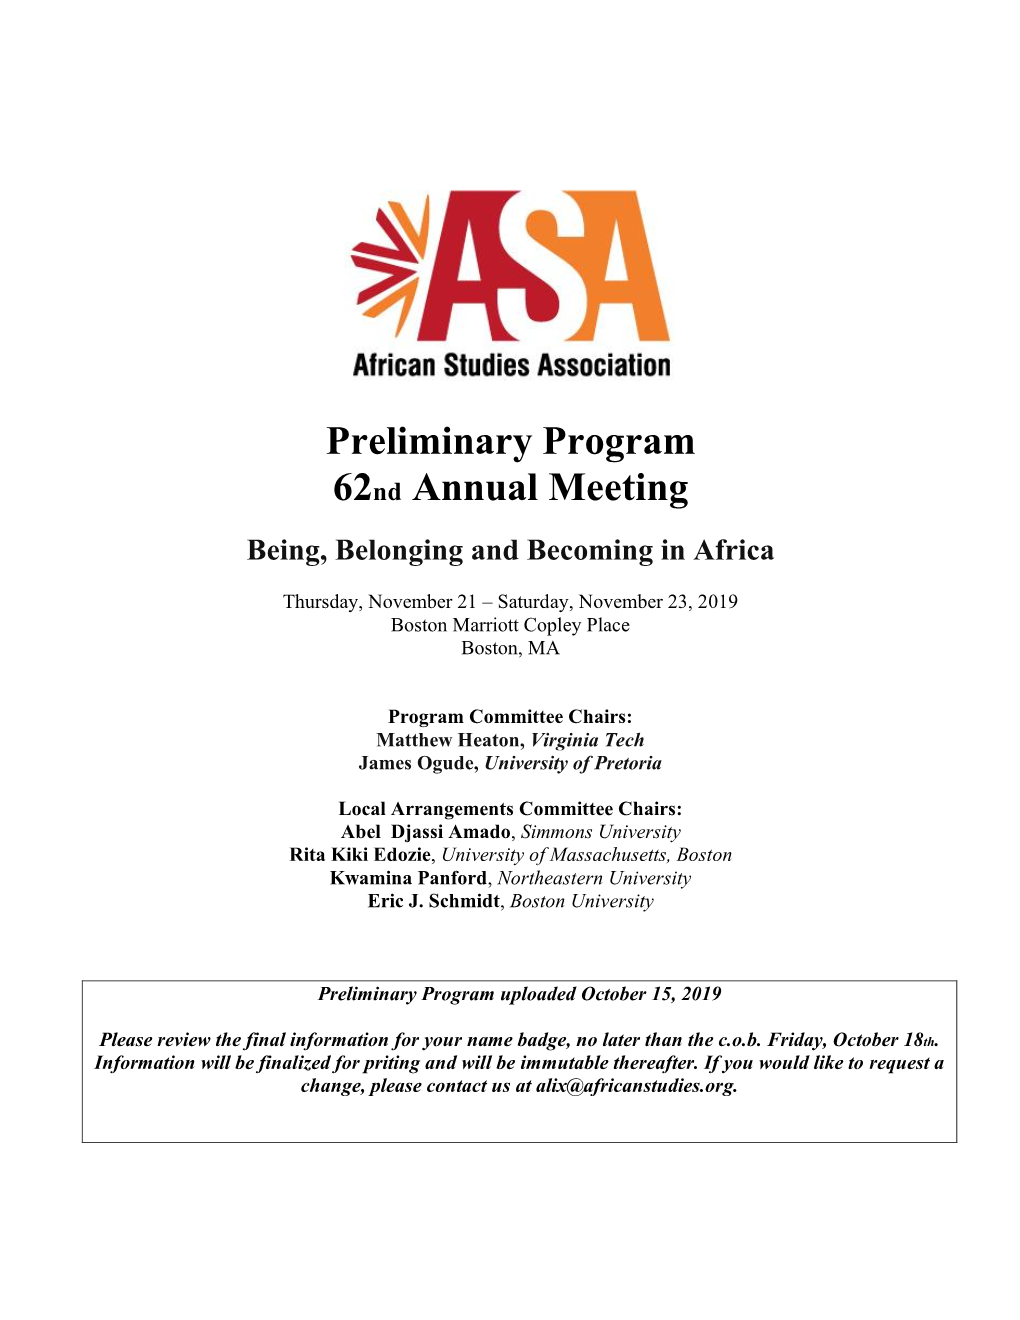 2019 Annual Meeting Final Preliminary Program